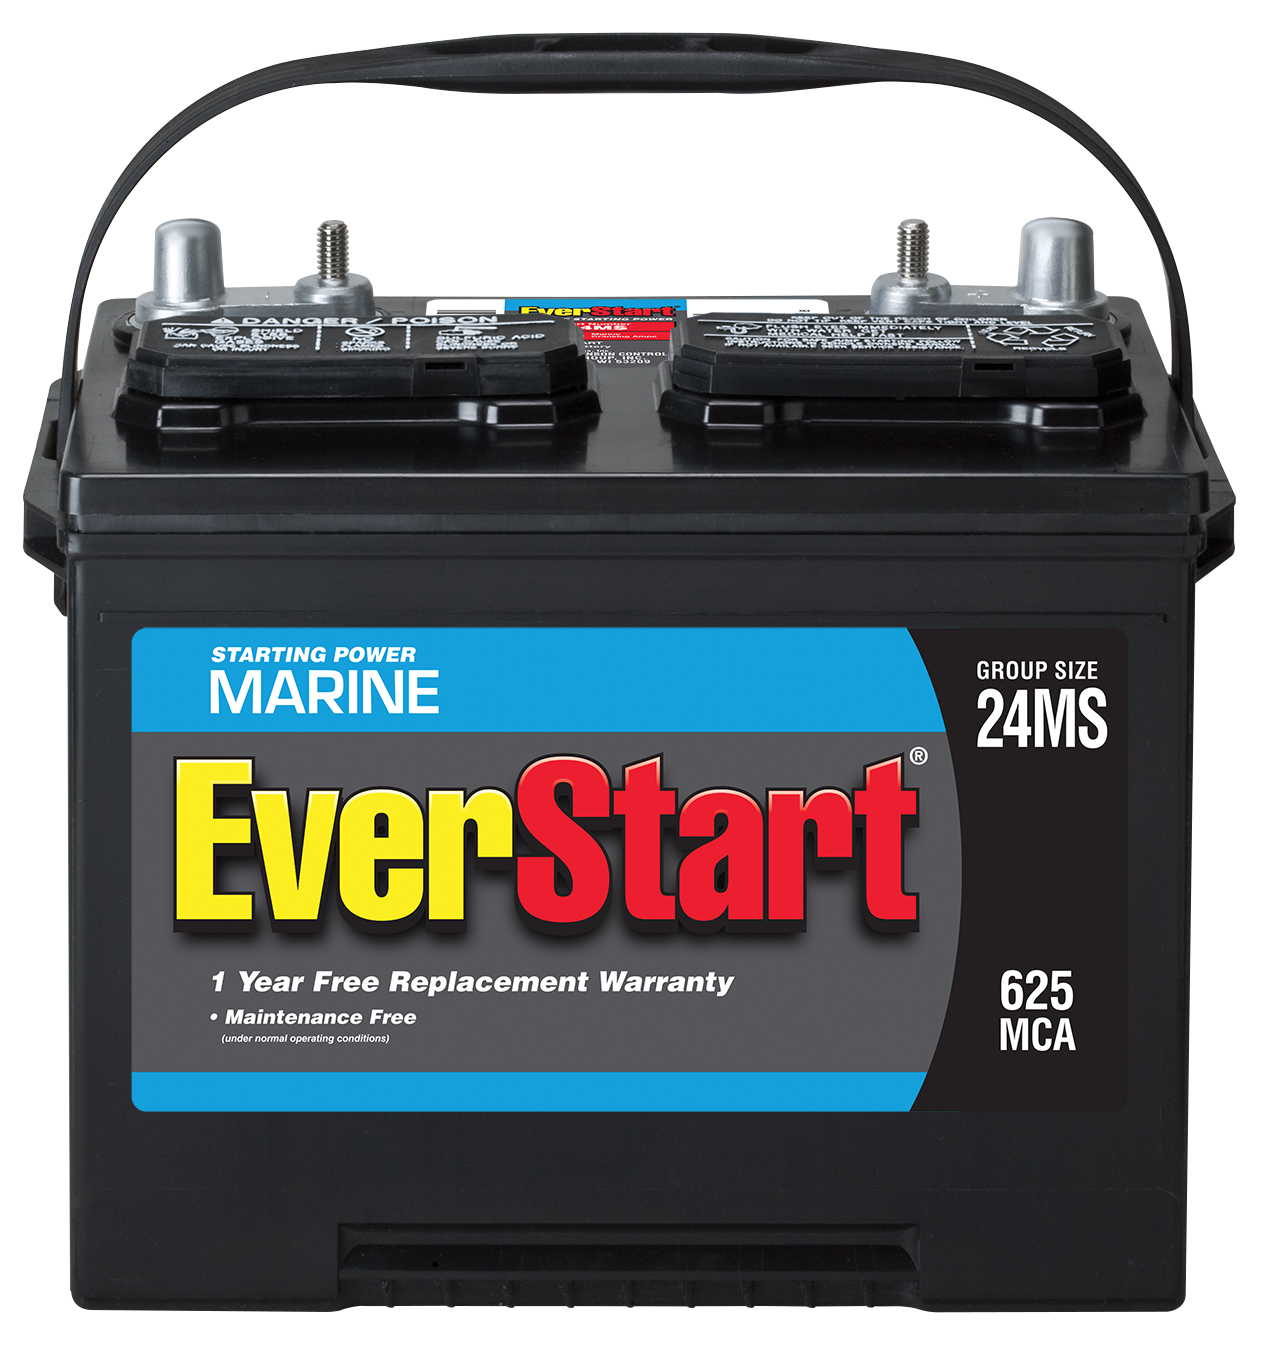 Marine batteries